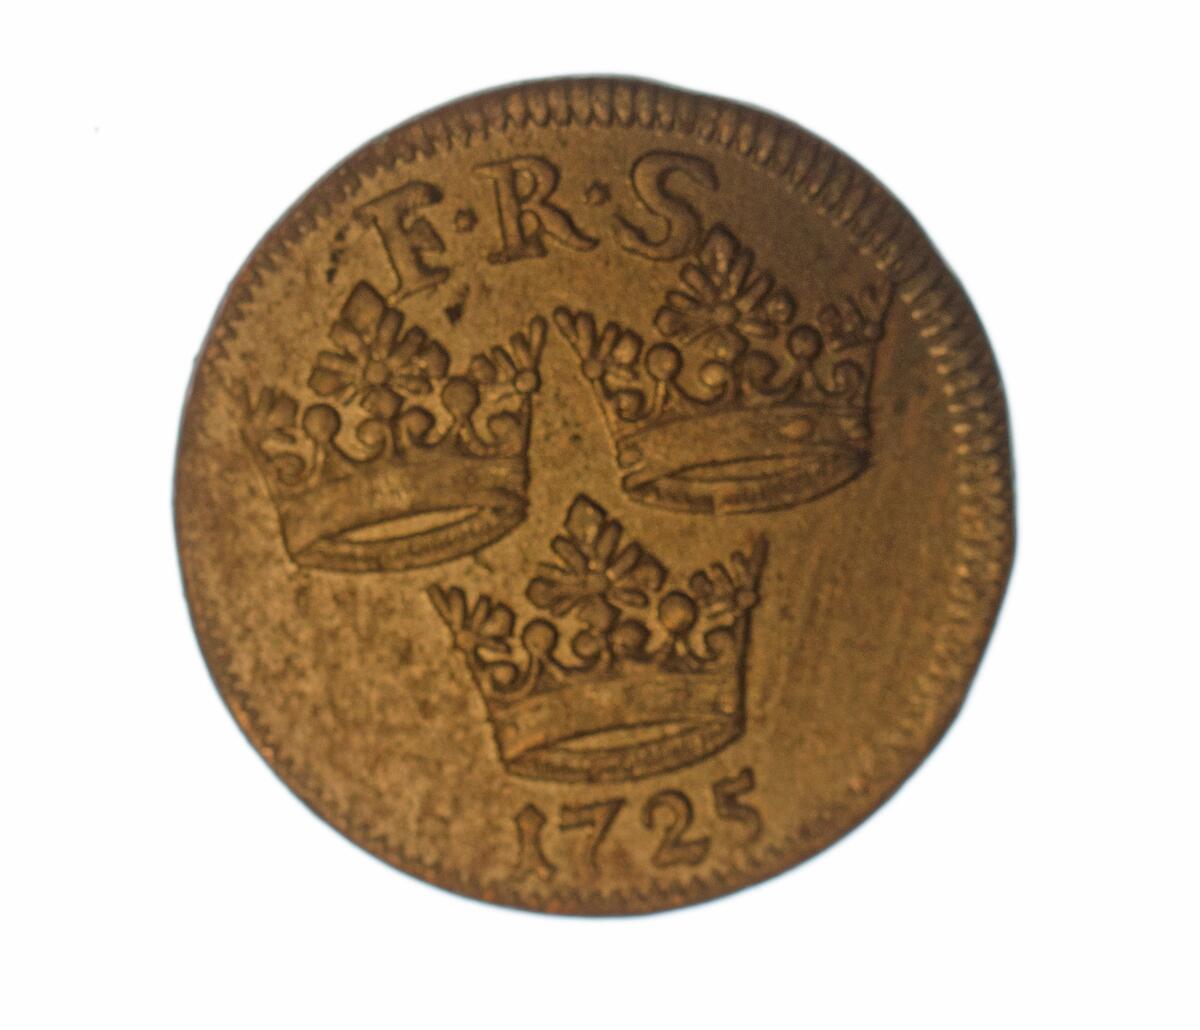 Mynt, 1 öre k.m. från Fredrik I tid, 1725